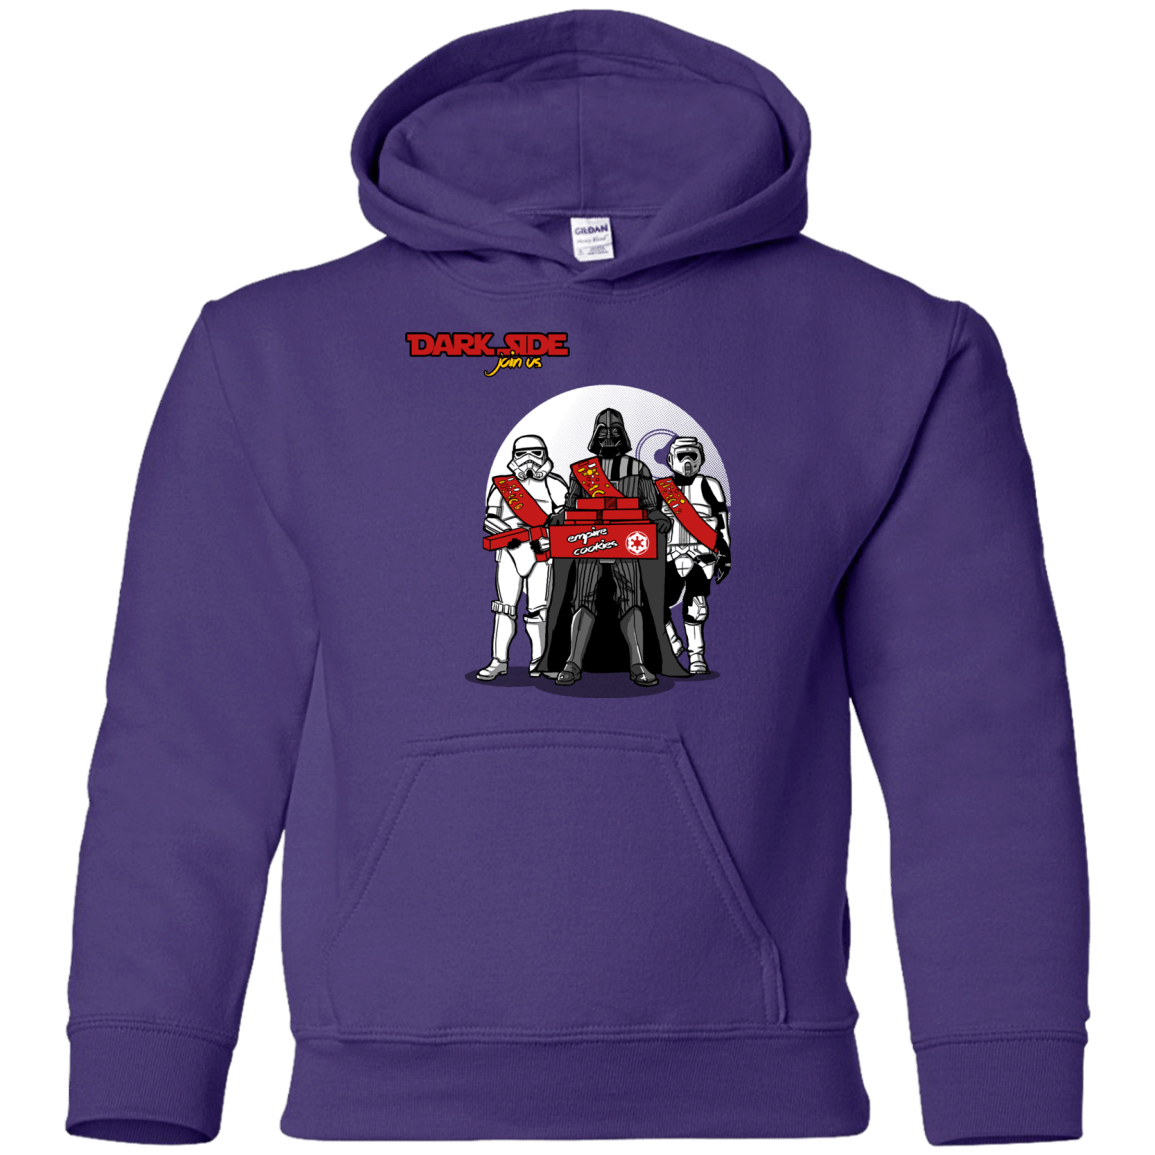 Sweatshirts Purple / YS Join The Dark Side Youth Hoodie